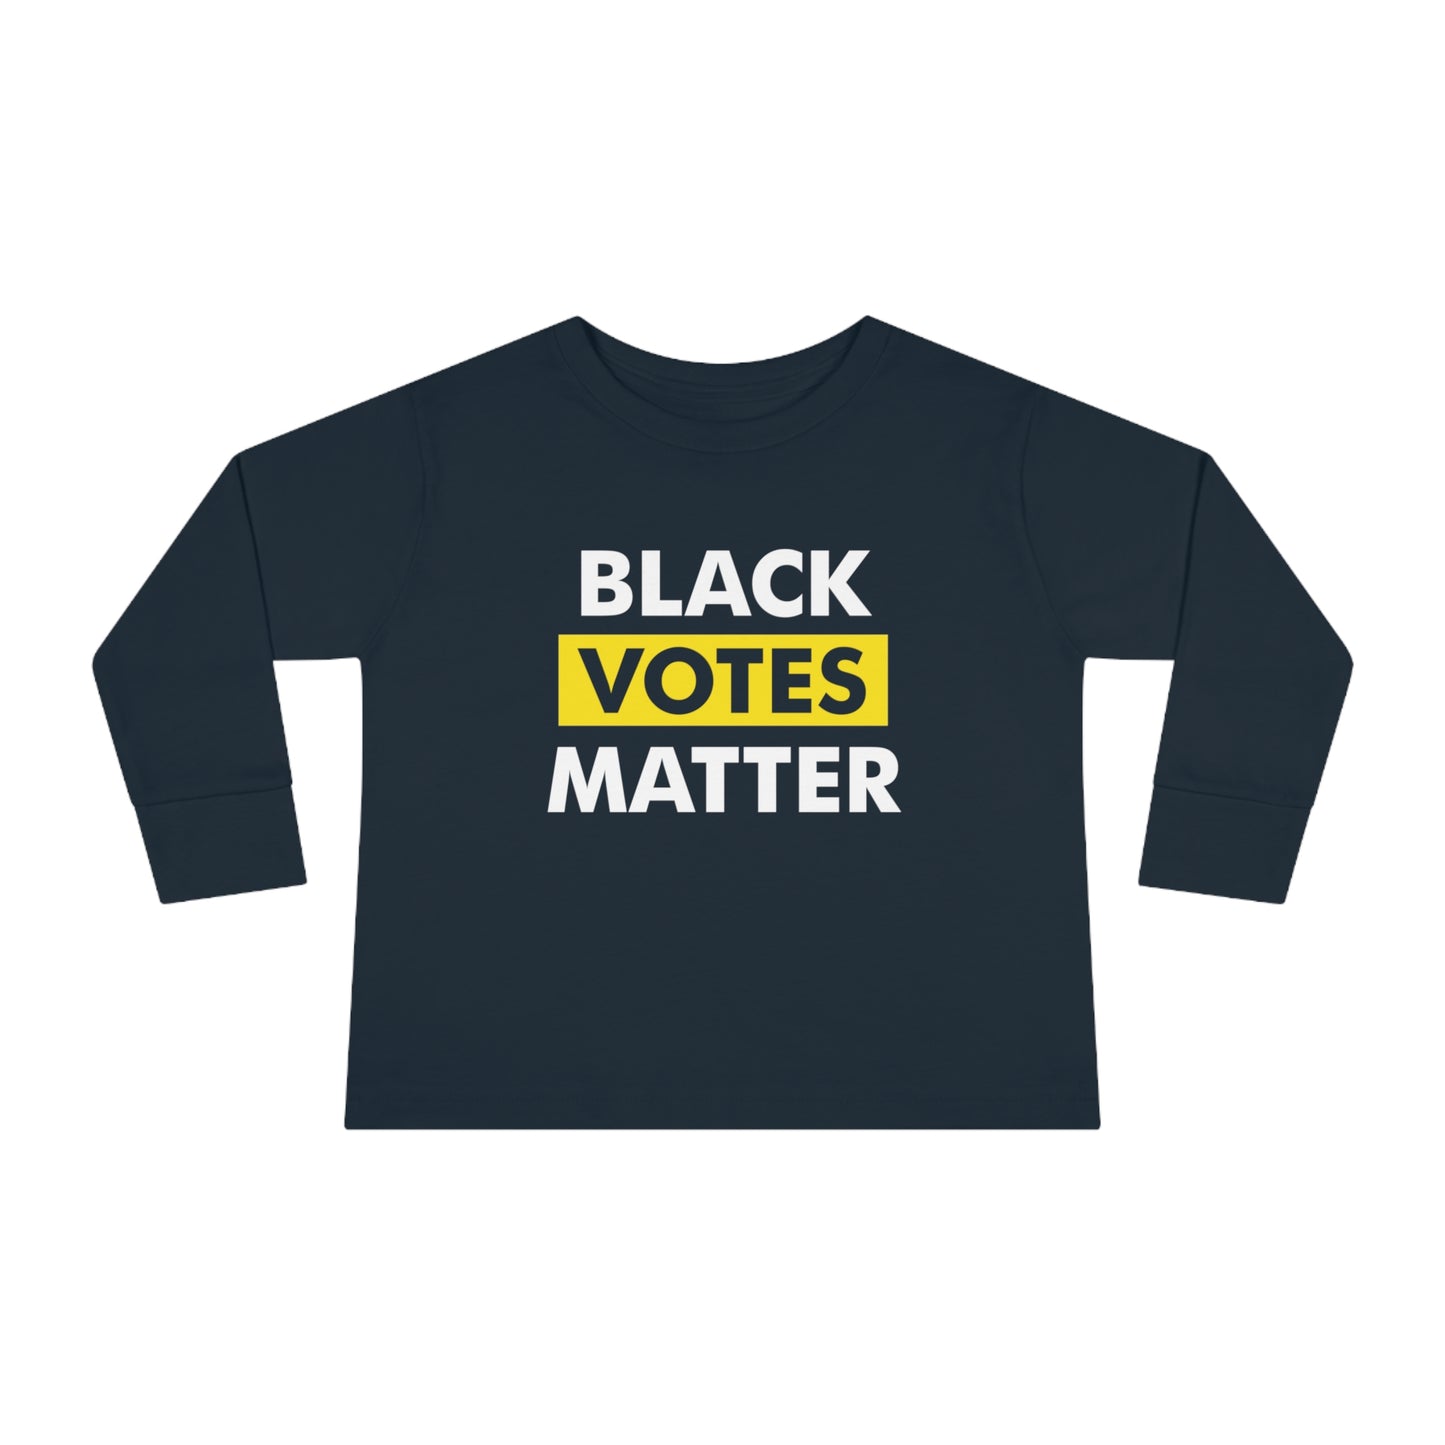 “Black Votes Matter” Toddler Long Sleeve Tee